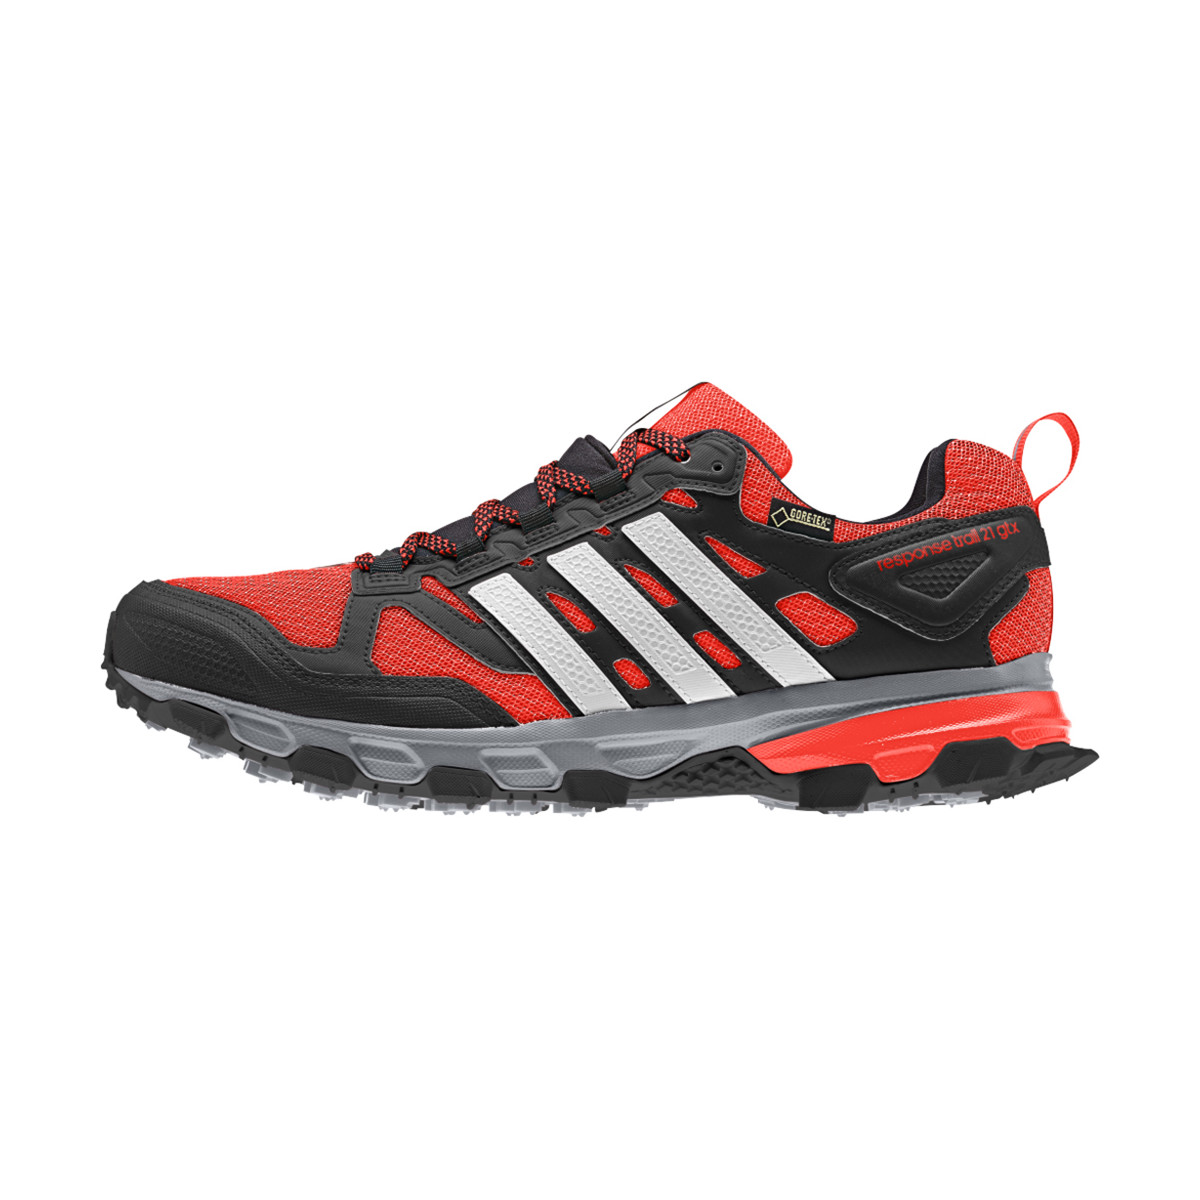 Adidas TERREX Response 21 GTX Trail Running Shoe Men's - Footwear